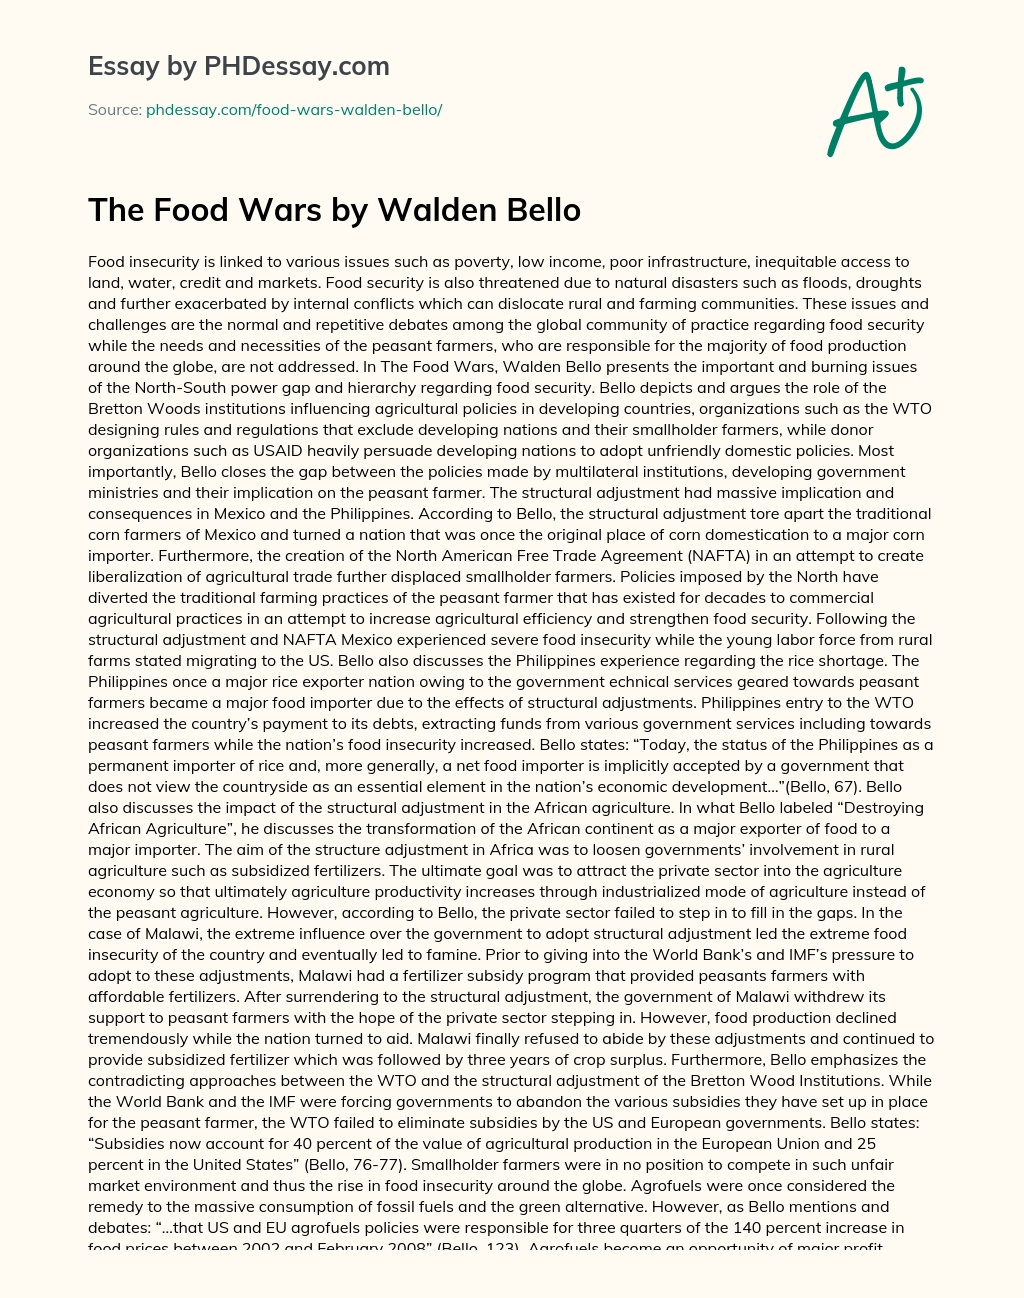 The Food Wars by Walden Bello essay